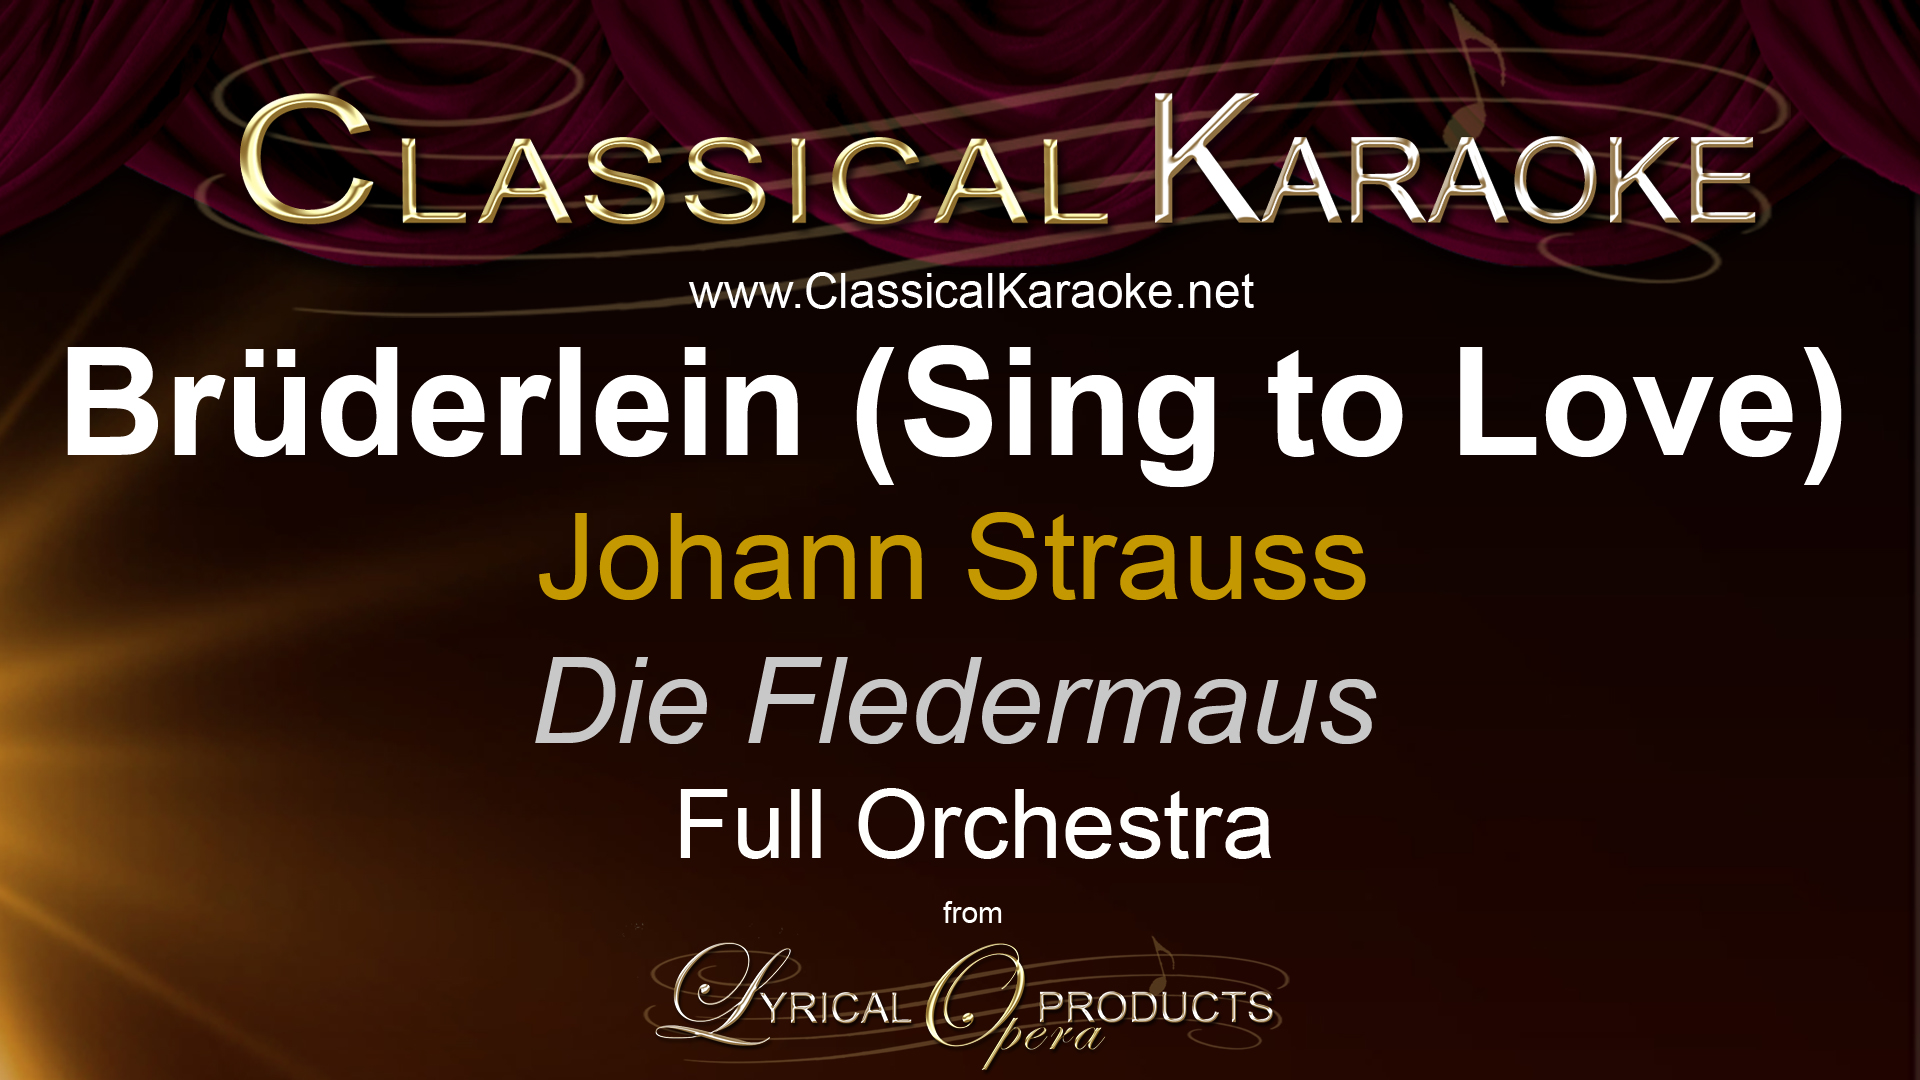 Brüderlein (Sing to Love), from Die Fledermaus, by Johann Strauss, Full Orchestral Accompaniment (karaoke) track